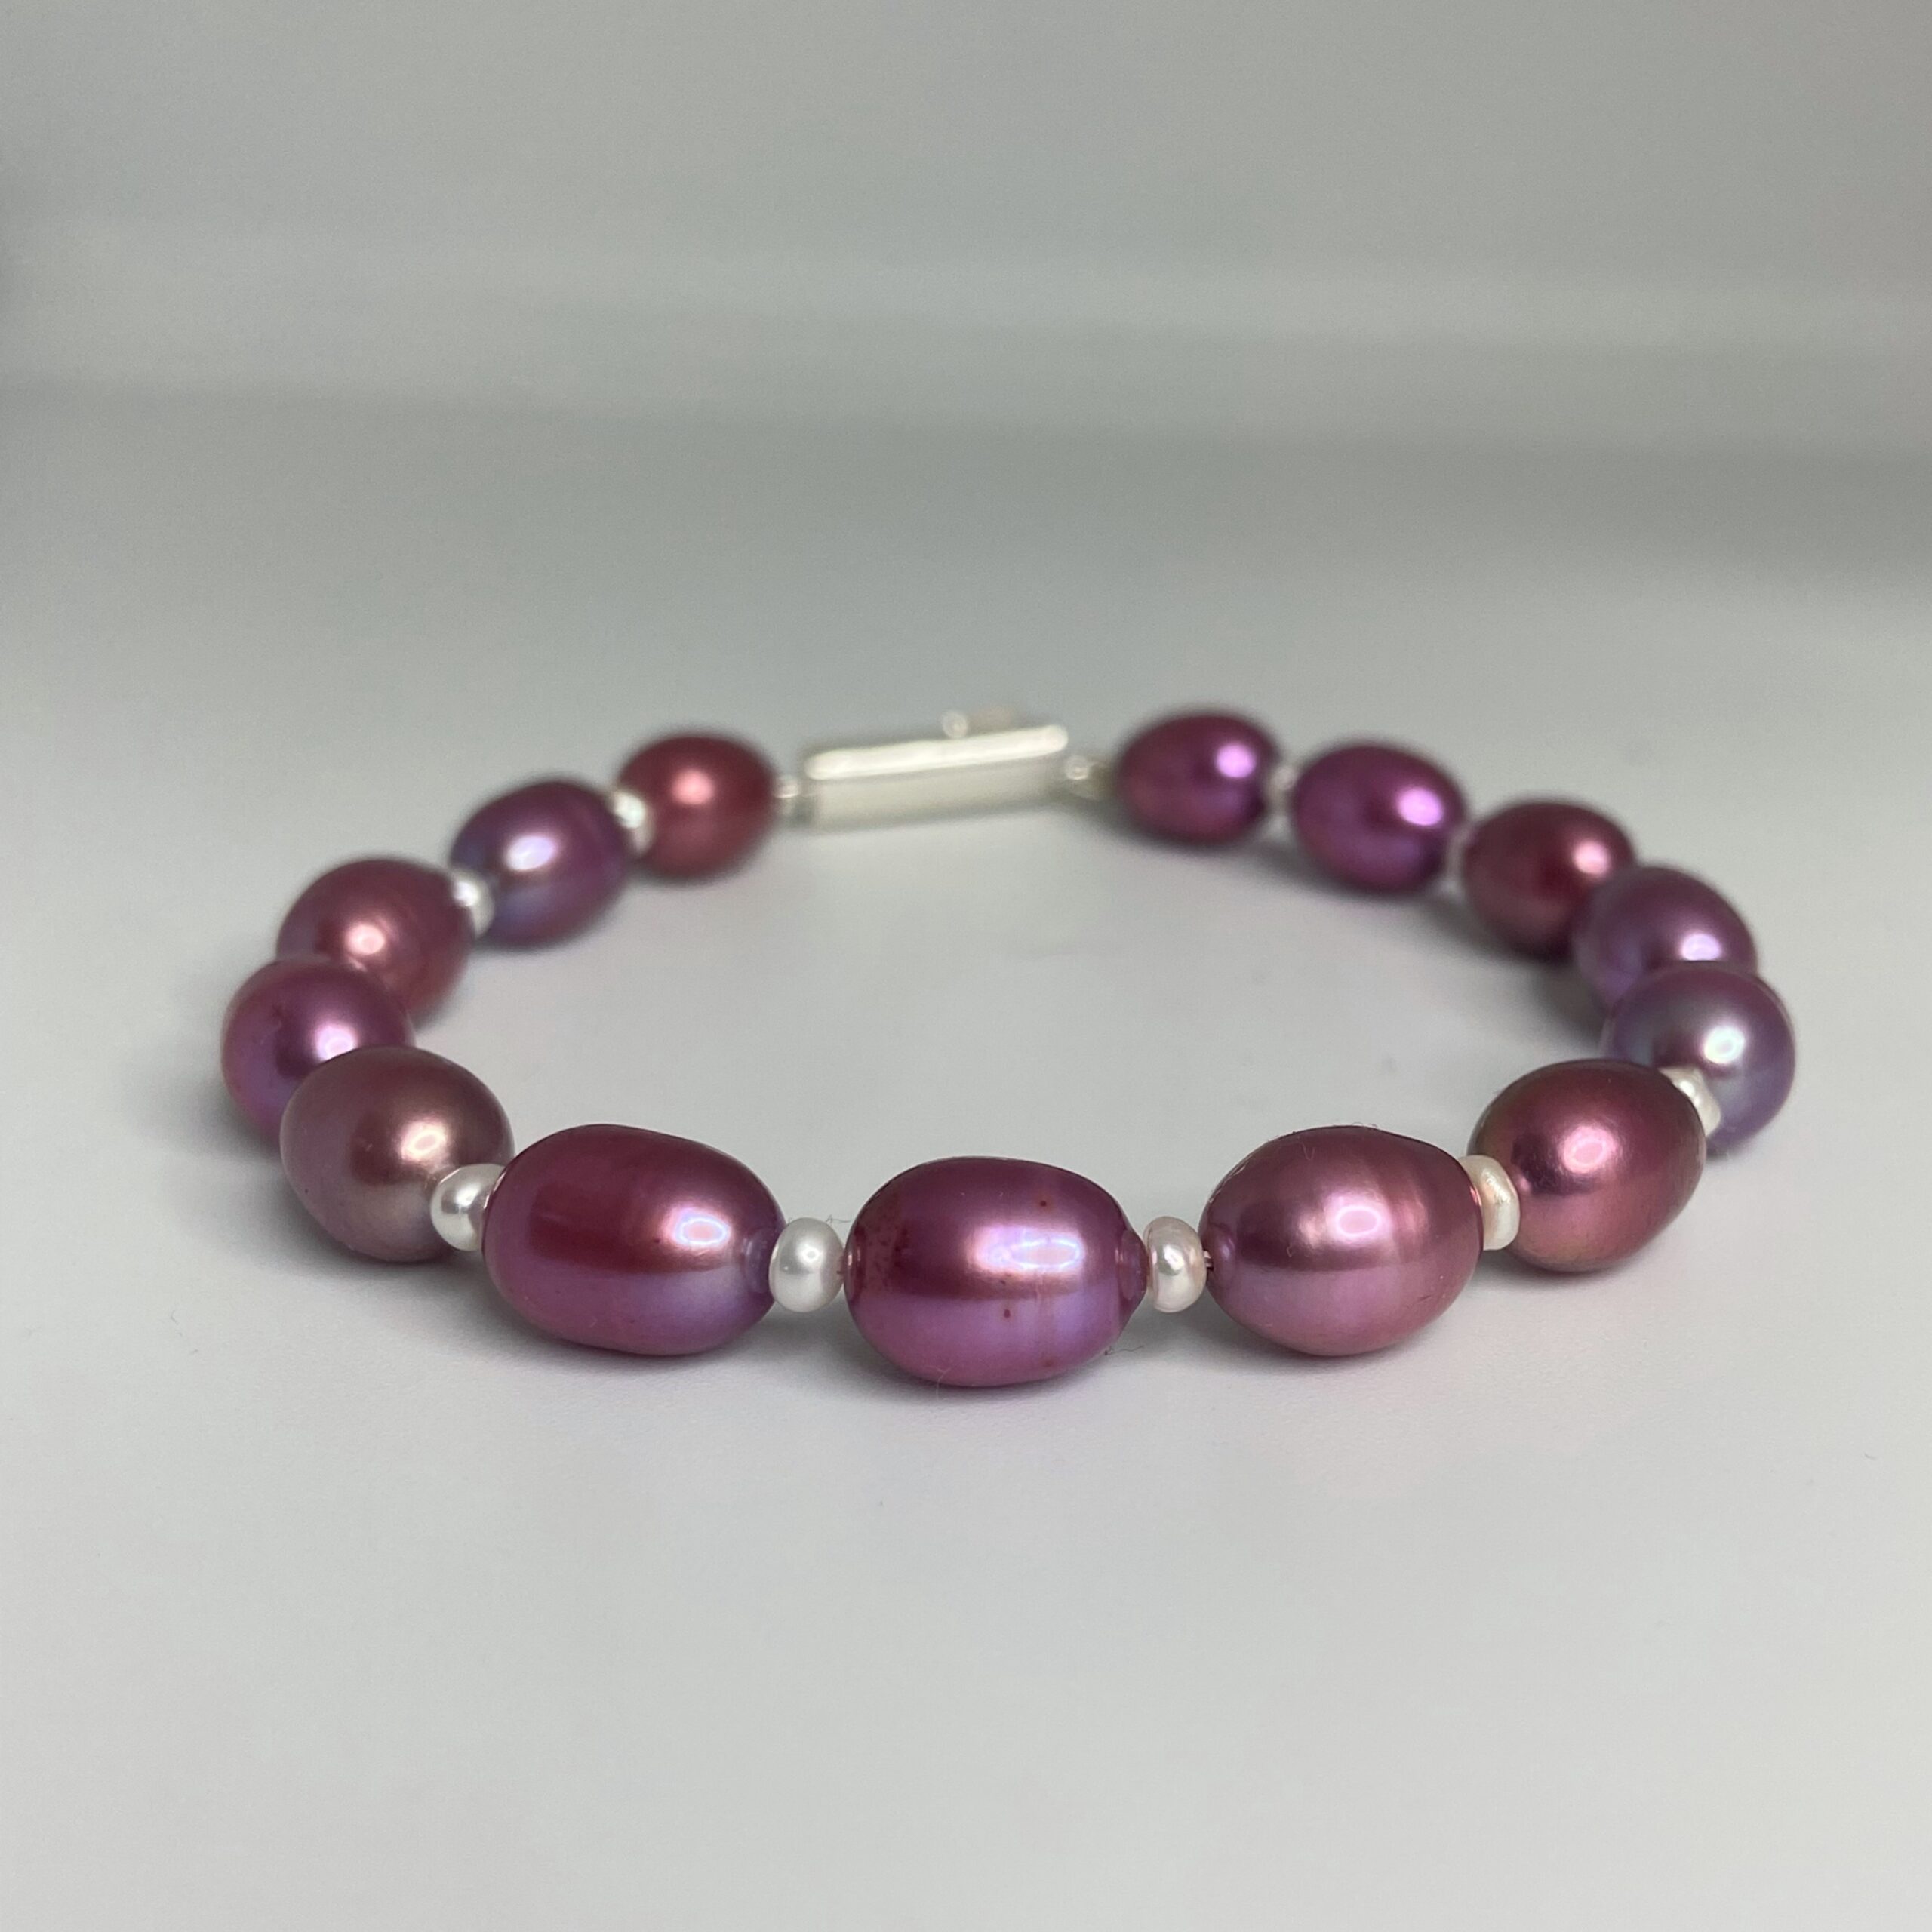 Ravishing Magenta Oval Pearls Bracelet With White Seed Pearls